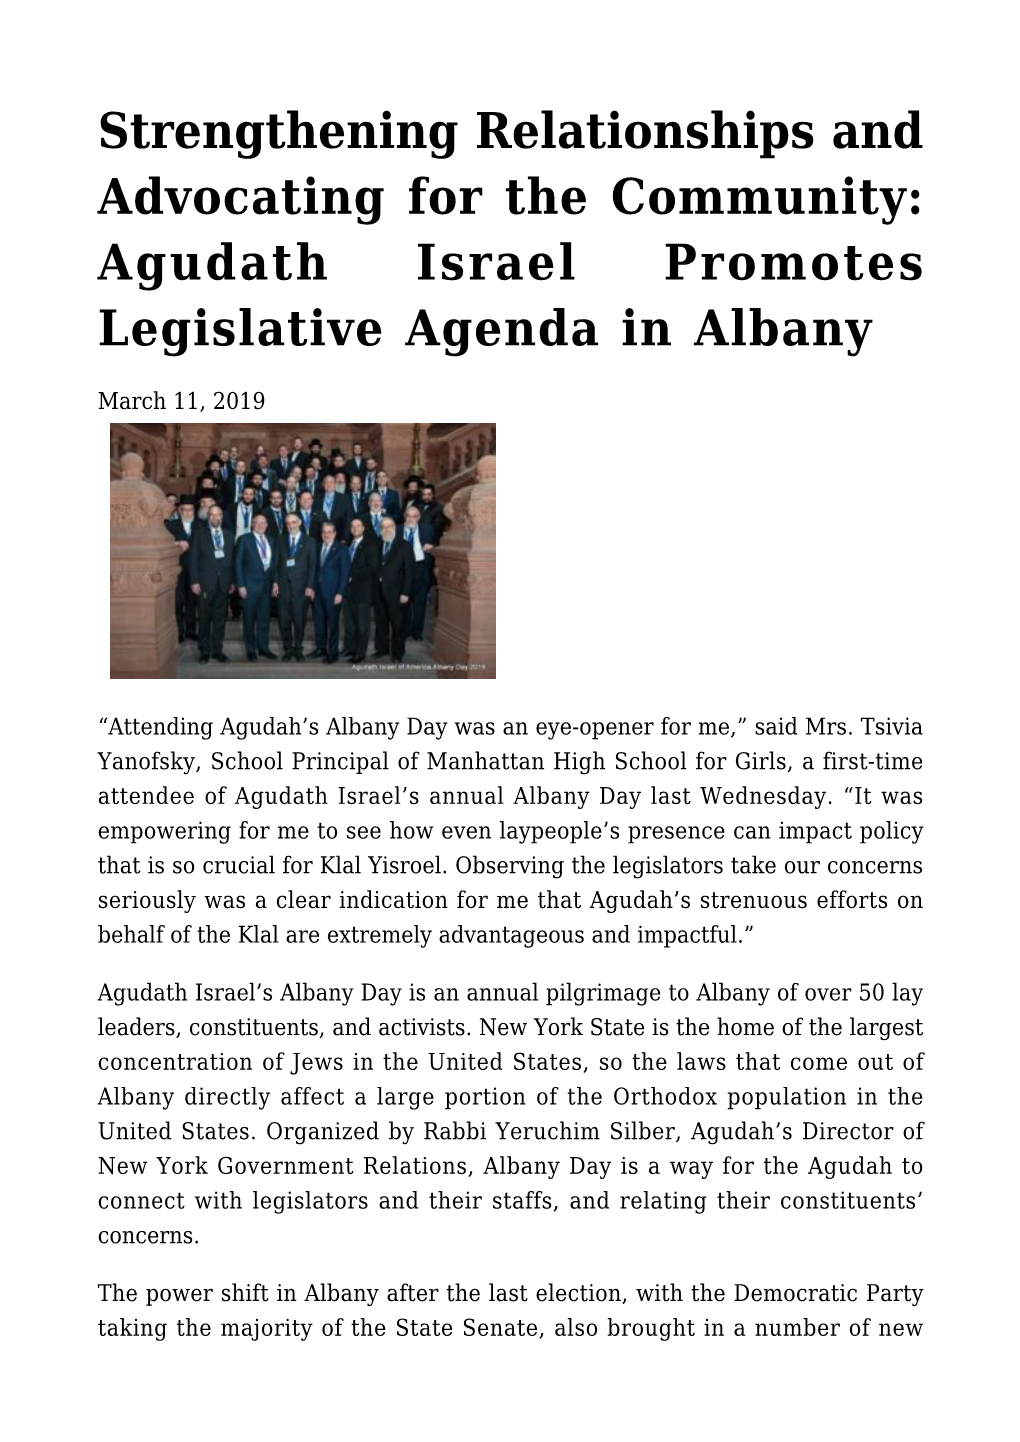 Strengthening Relationships and Advocating for the Community: Agudath Israel Promotes Legislative Agenda in Albany